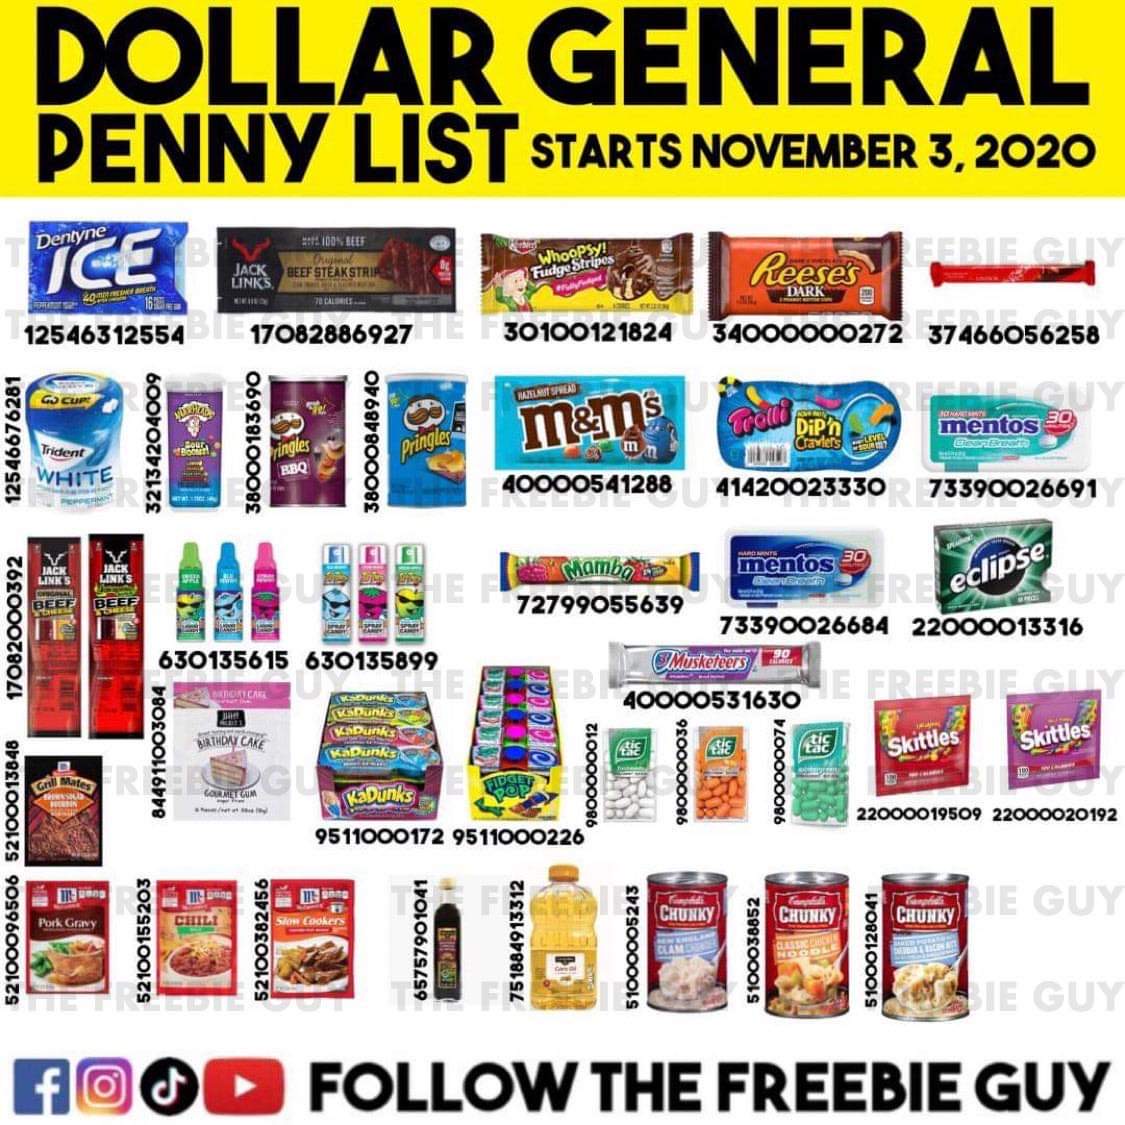 DOLLAR GENERAL PENNY LIST NOVEMBER 3, 2020 The Freebie Guy